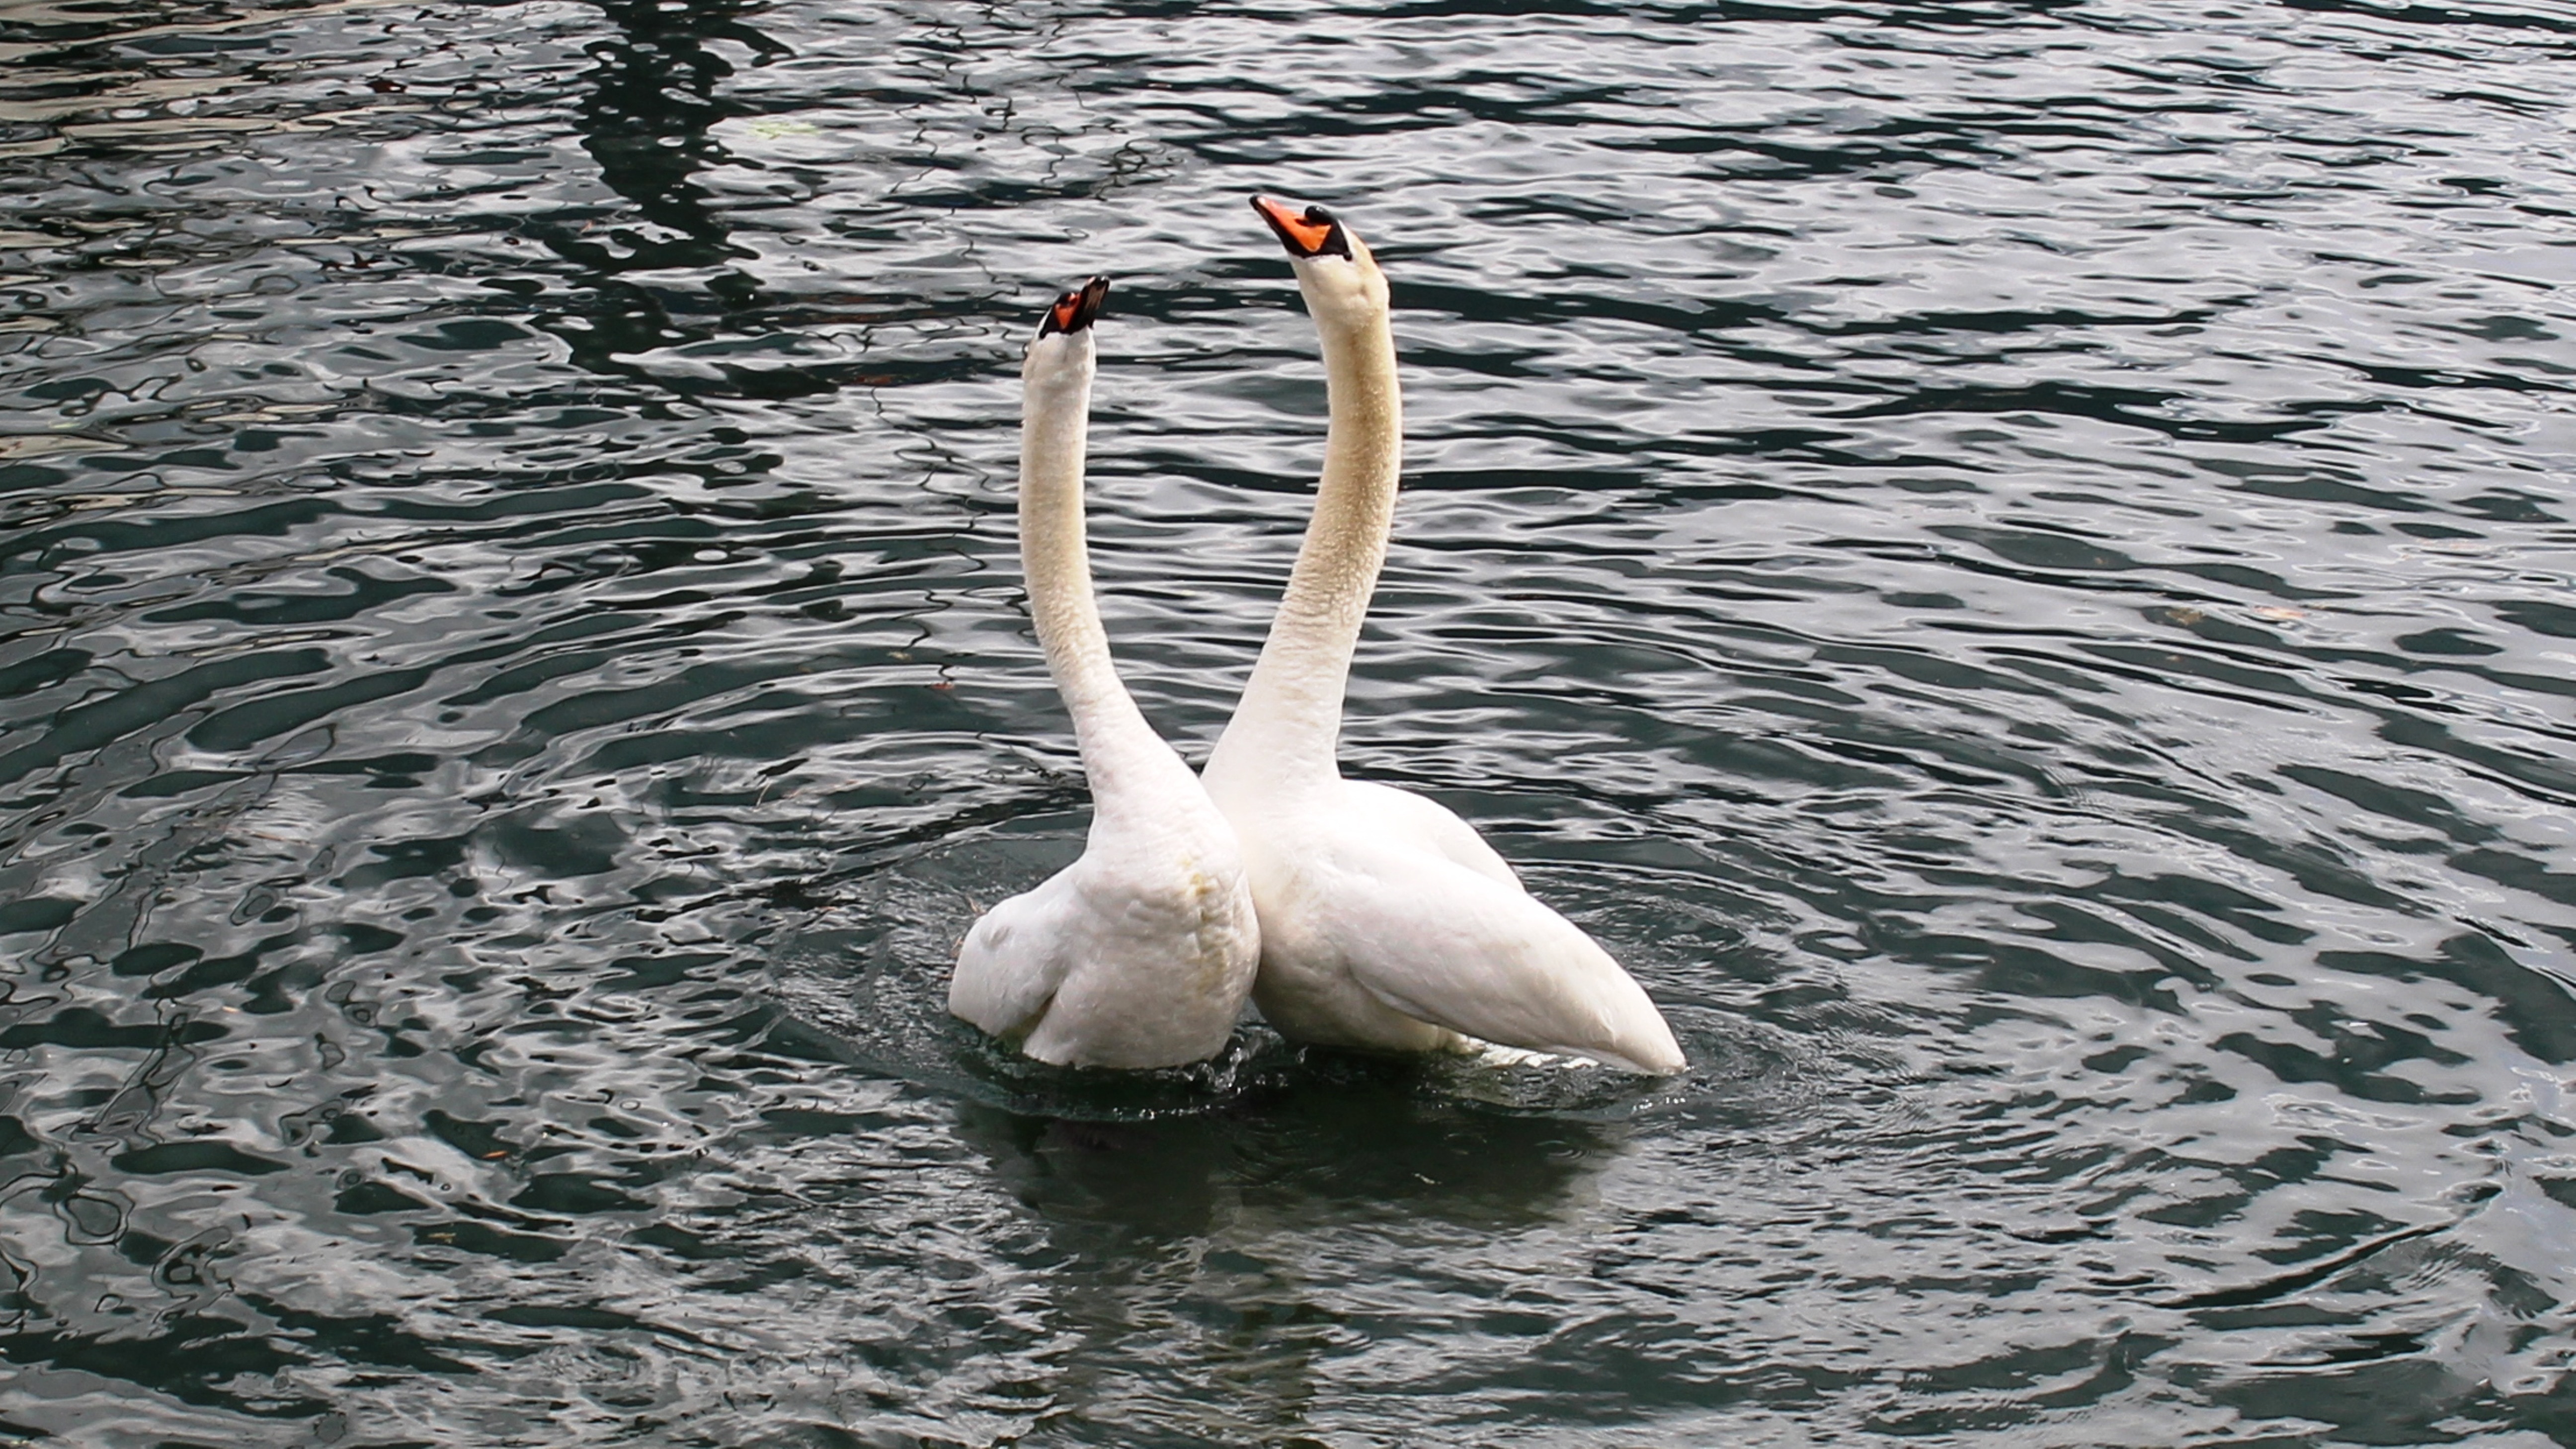 2 white swans